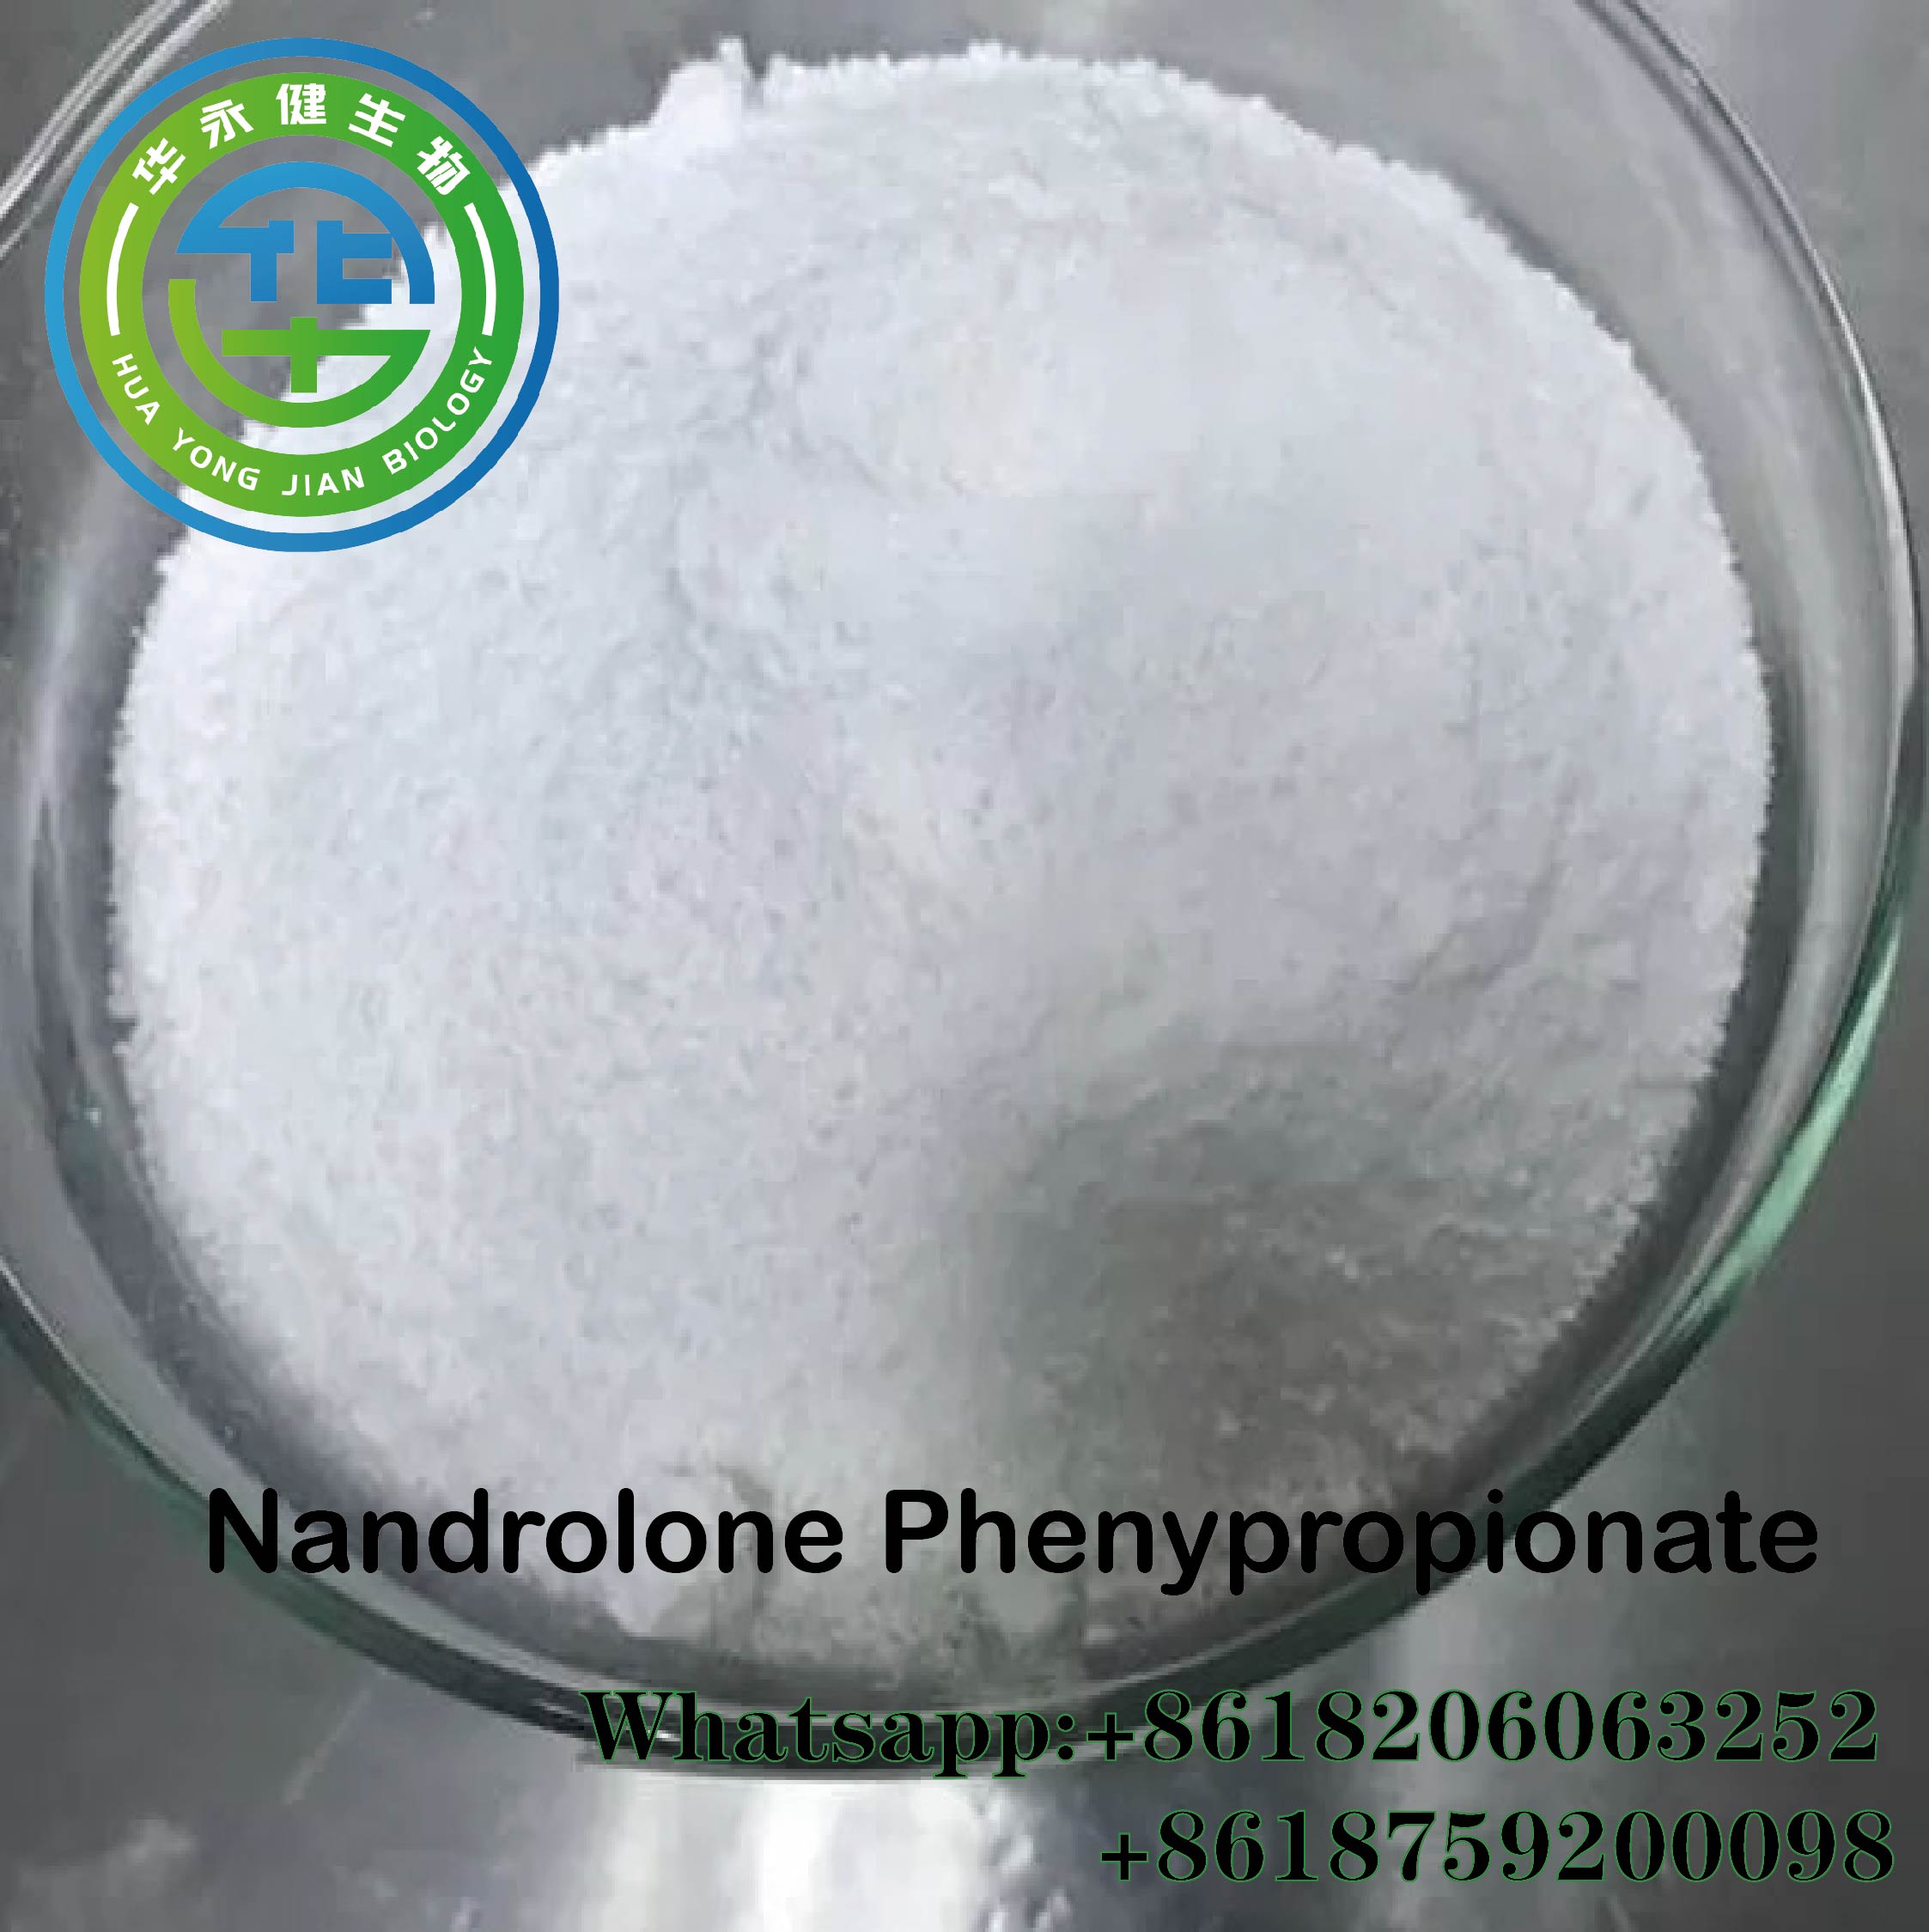 Blend Bodybuilding Powder NPP Safe Nandrolone Steroids Powder Nandrolone Phenylpropionate CAS 7207-92-3 